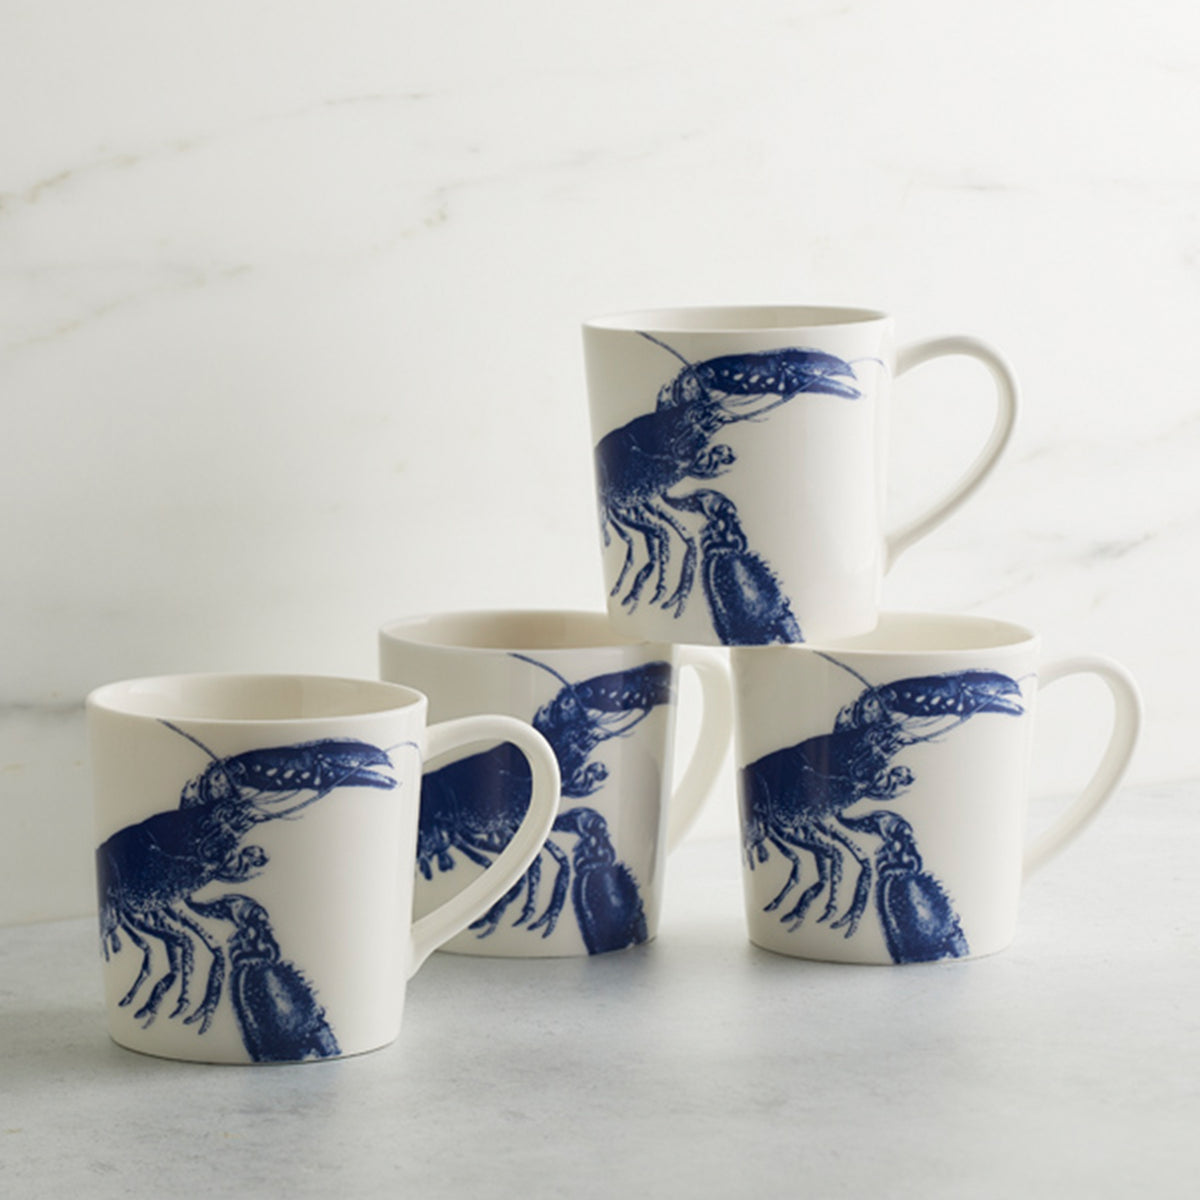 Blue Lobsters Porcelain Set of 4 Mugs from Caskata